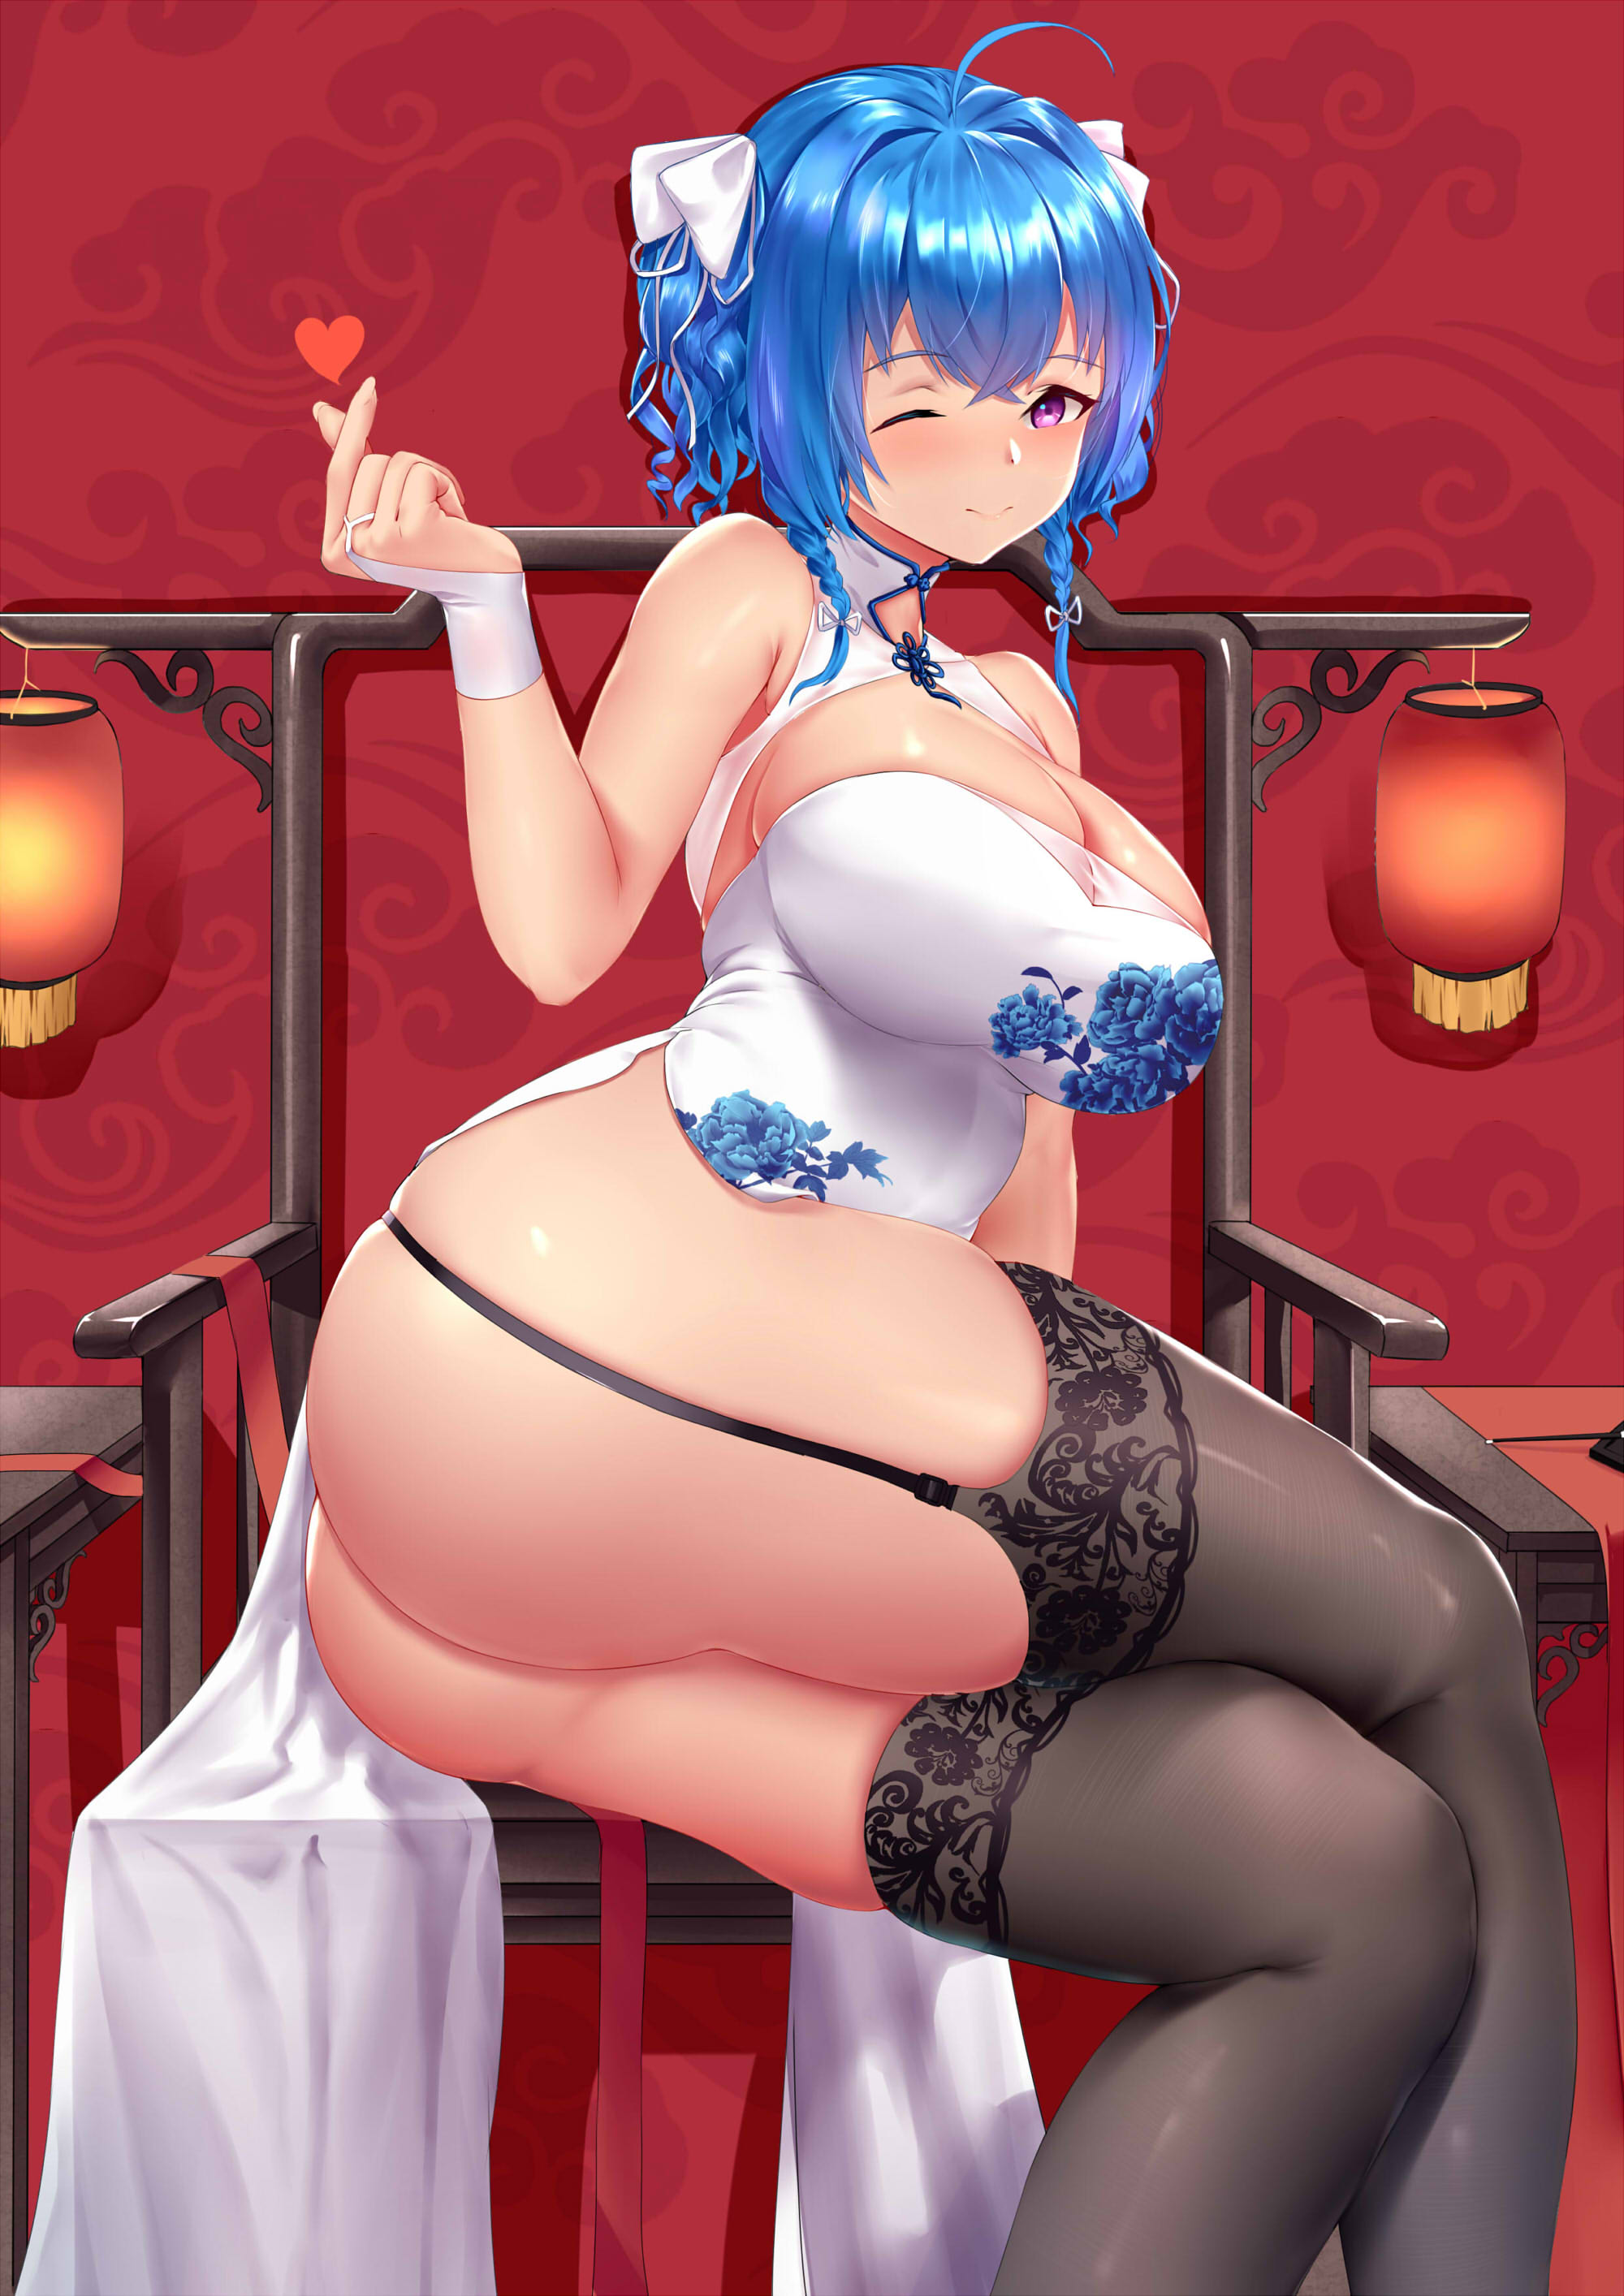 Anime 2000x2828 anime anime girls 2D artwork big boobs boobs stockings portrait display huge breasts blue hair ass Azur Lane Saint Louis (Azur Lane) cheongsam thighs wide hips black stockings